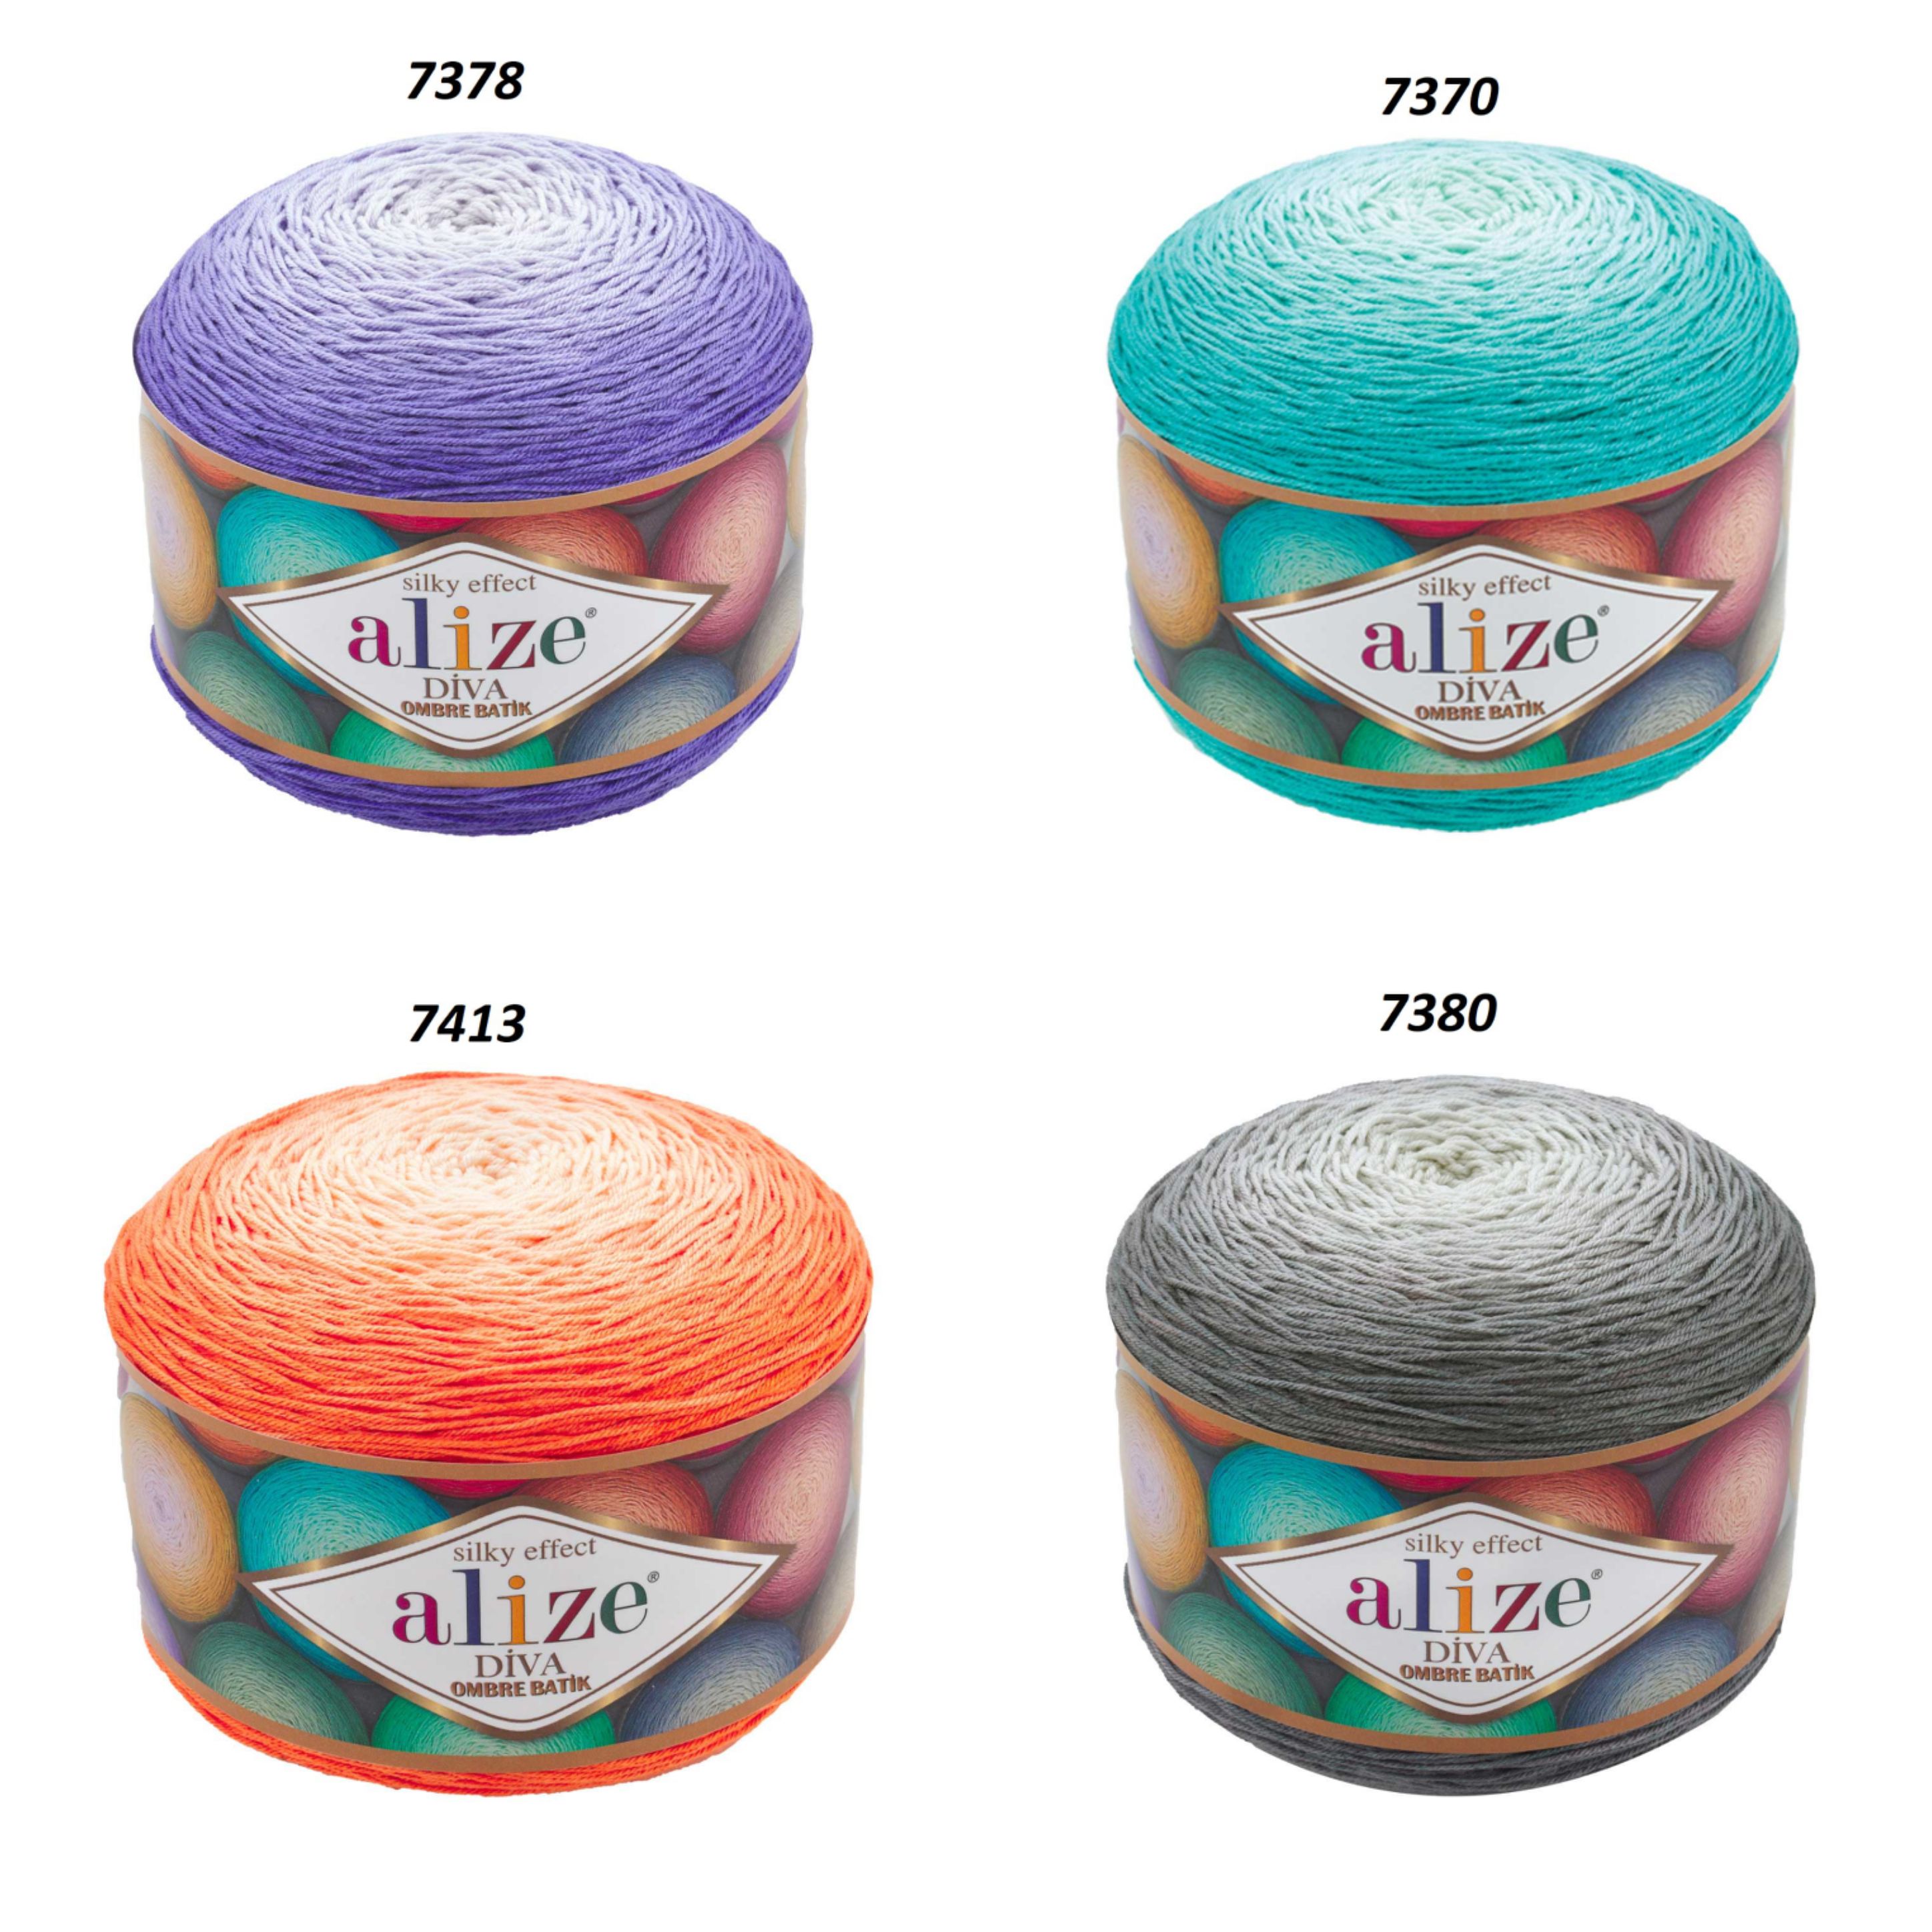 Alize Diva Ombre Batik 250 Gr Mevsimlik Farklı Renkler Mevcuttur